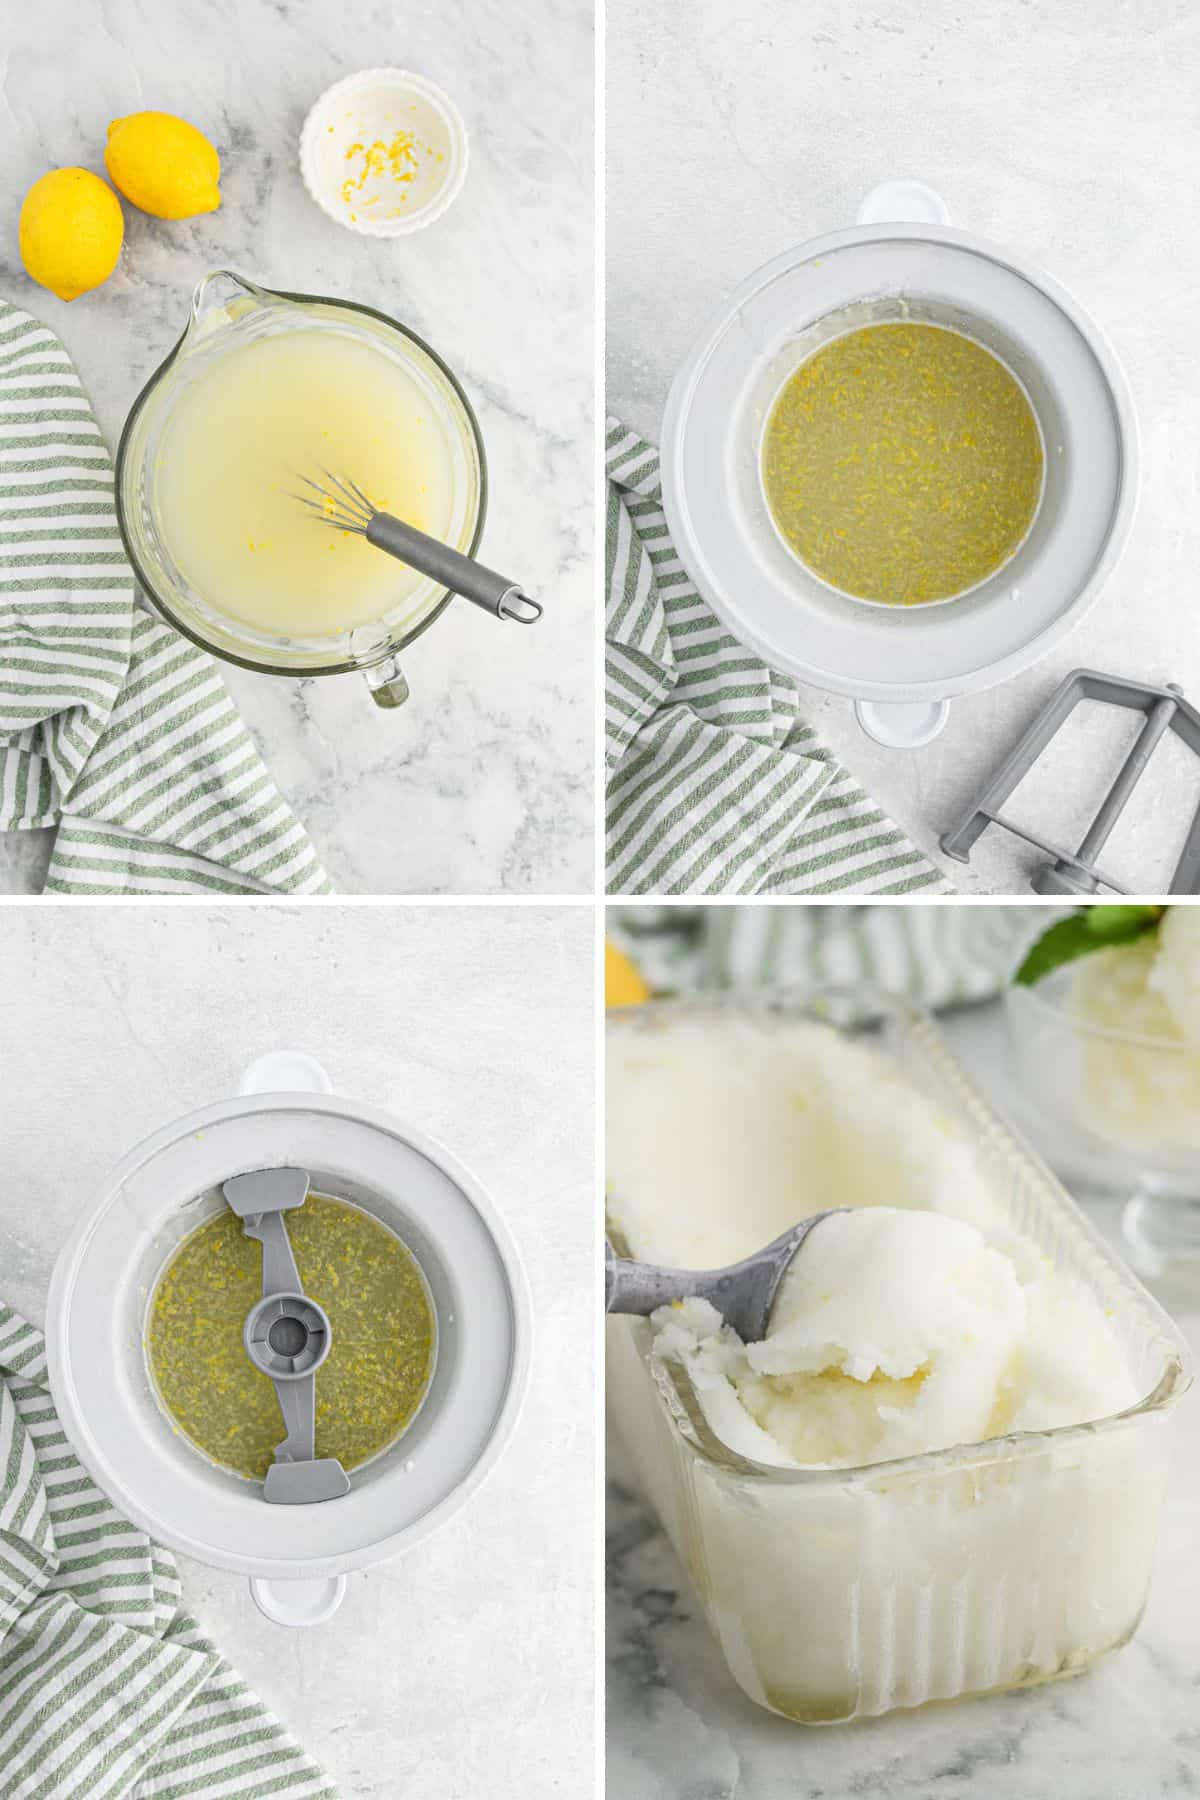 Collage of images showing the steps for making lemon sorbet.